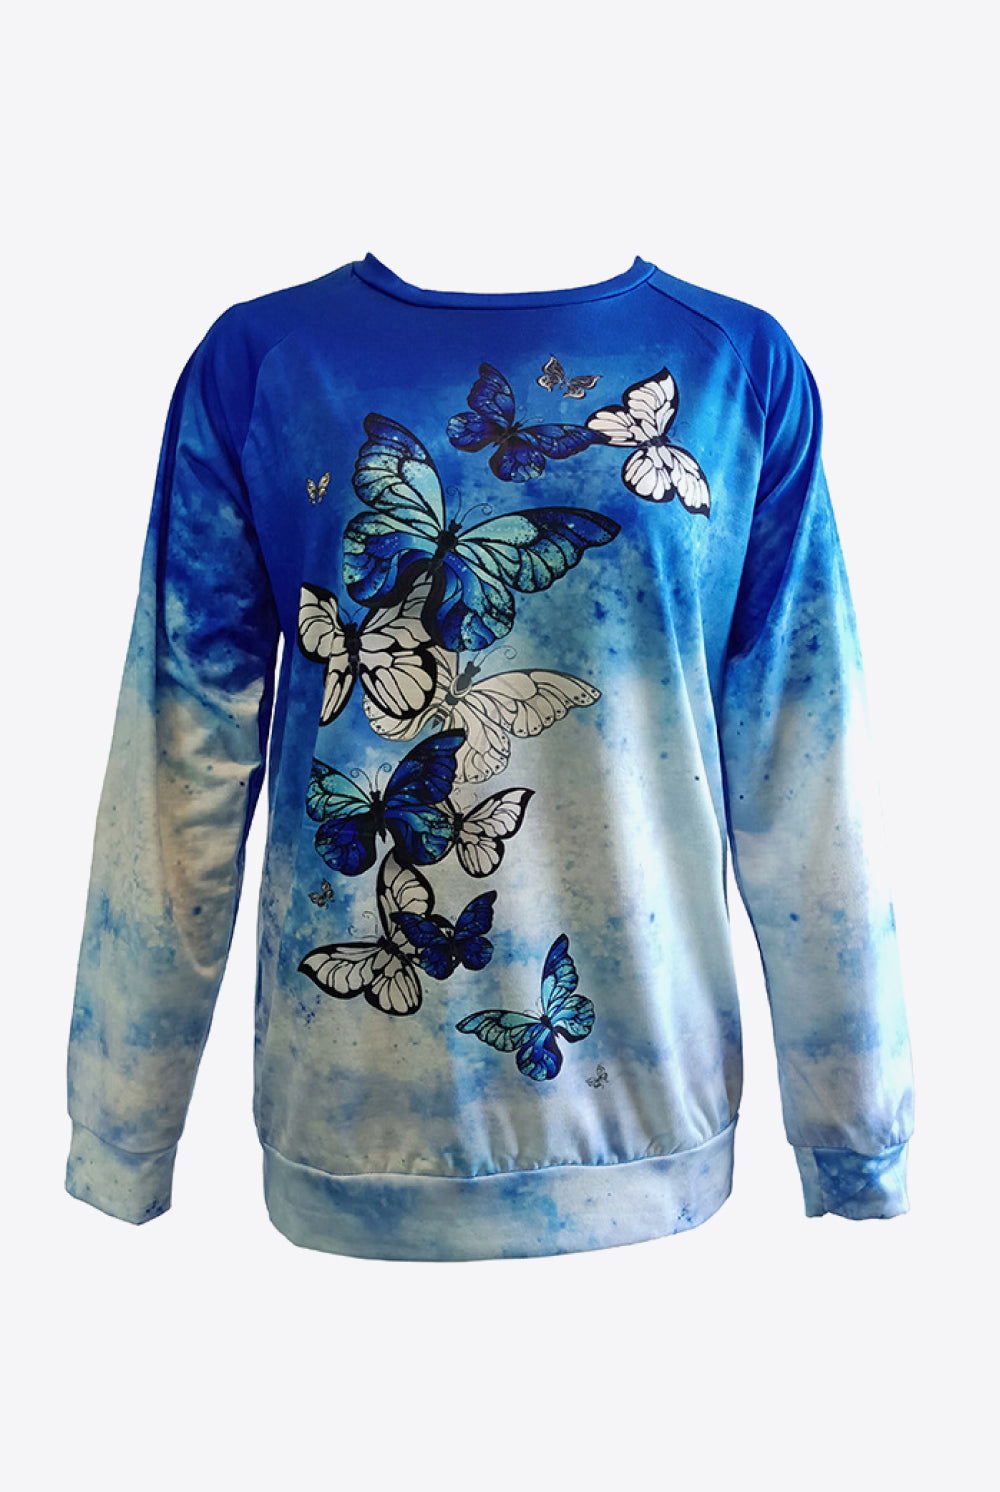 Lavender Tie-Dye Butterfly Graphic Raglan Sleeve Sweatshirt Sweatshirts